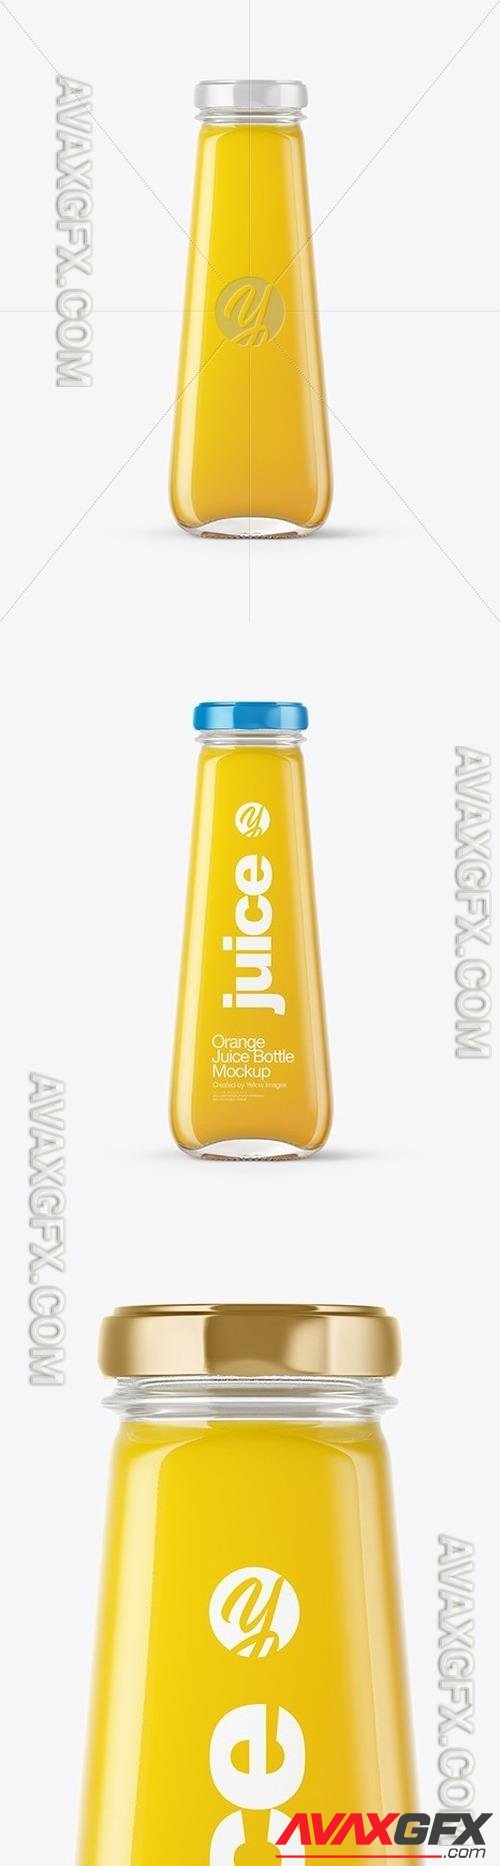 Clear Glass Bottle with Orange Juice Mockup 46884 TIF